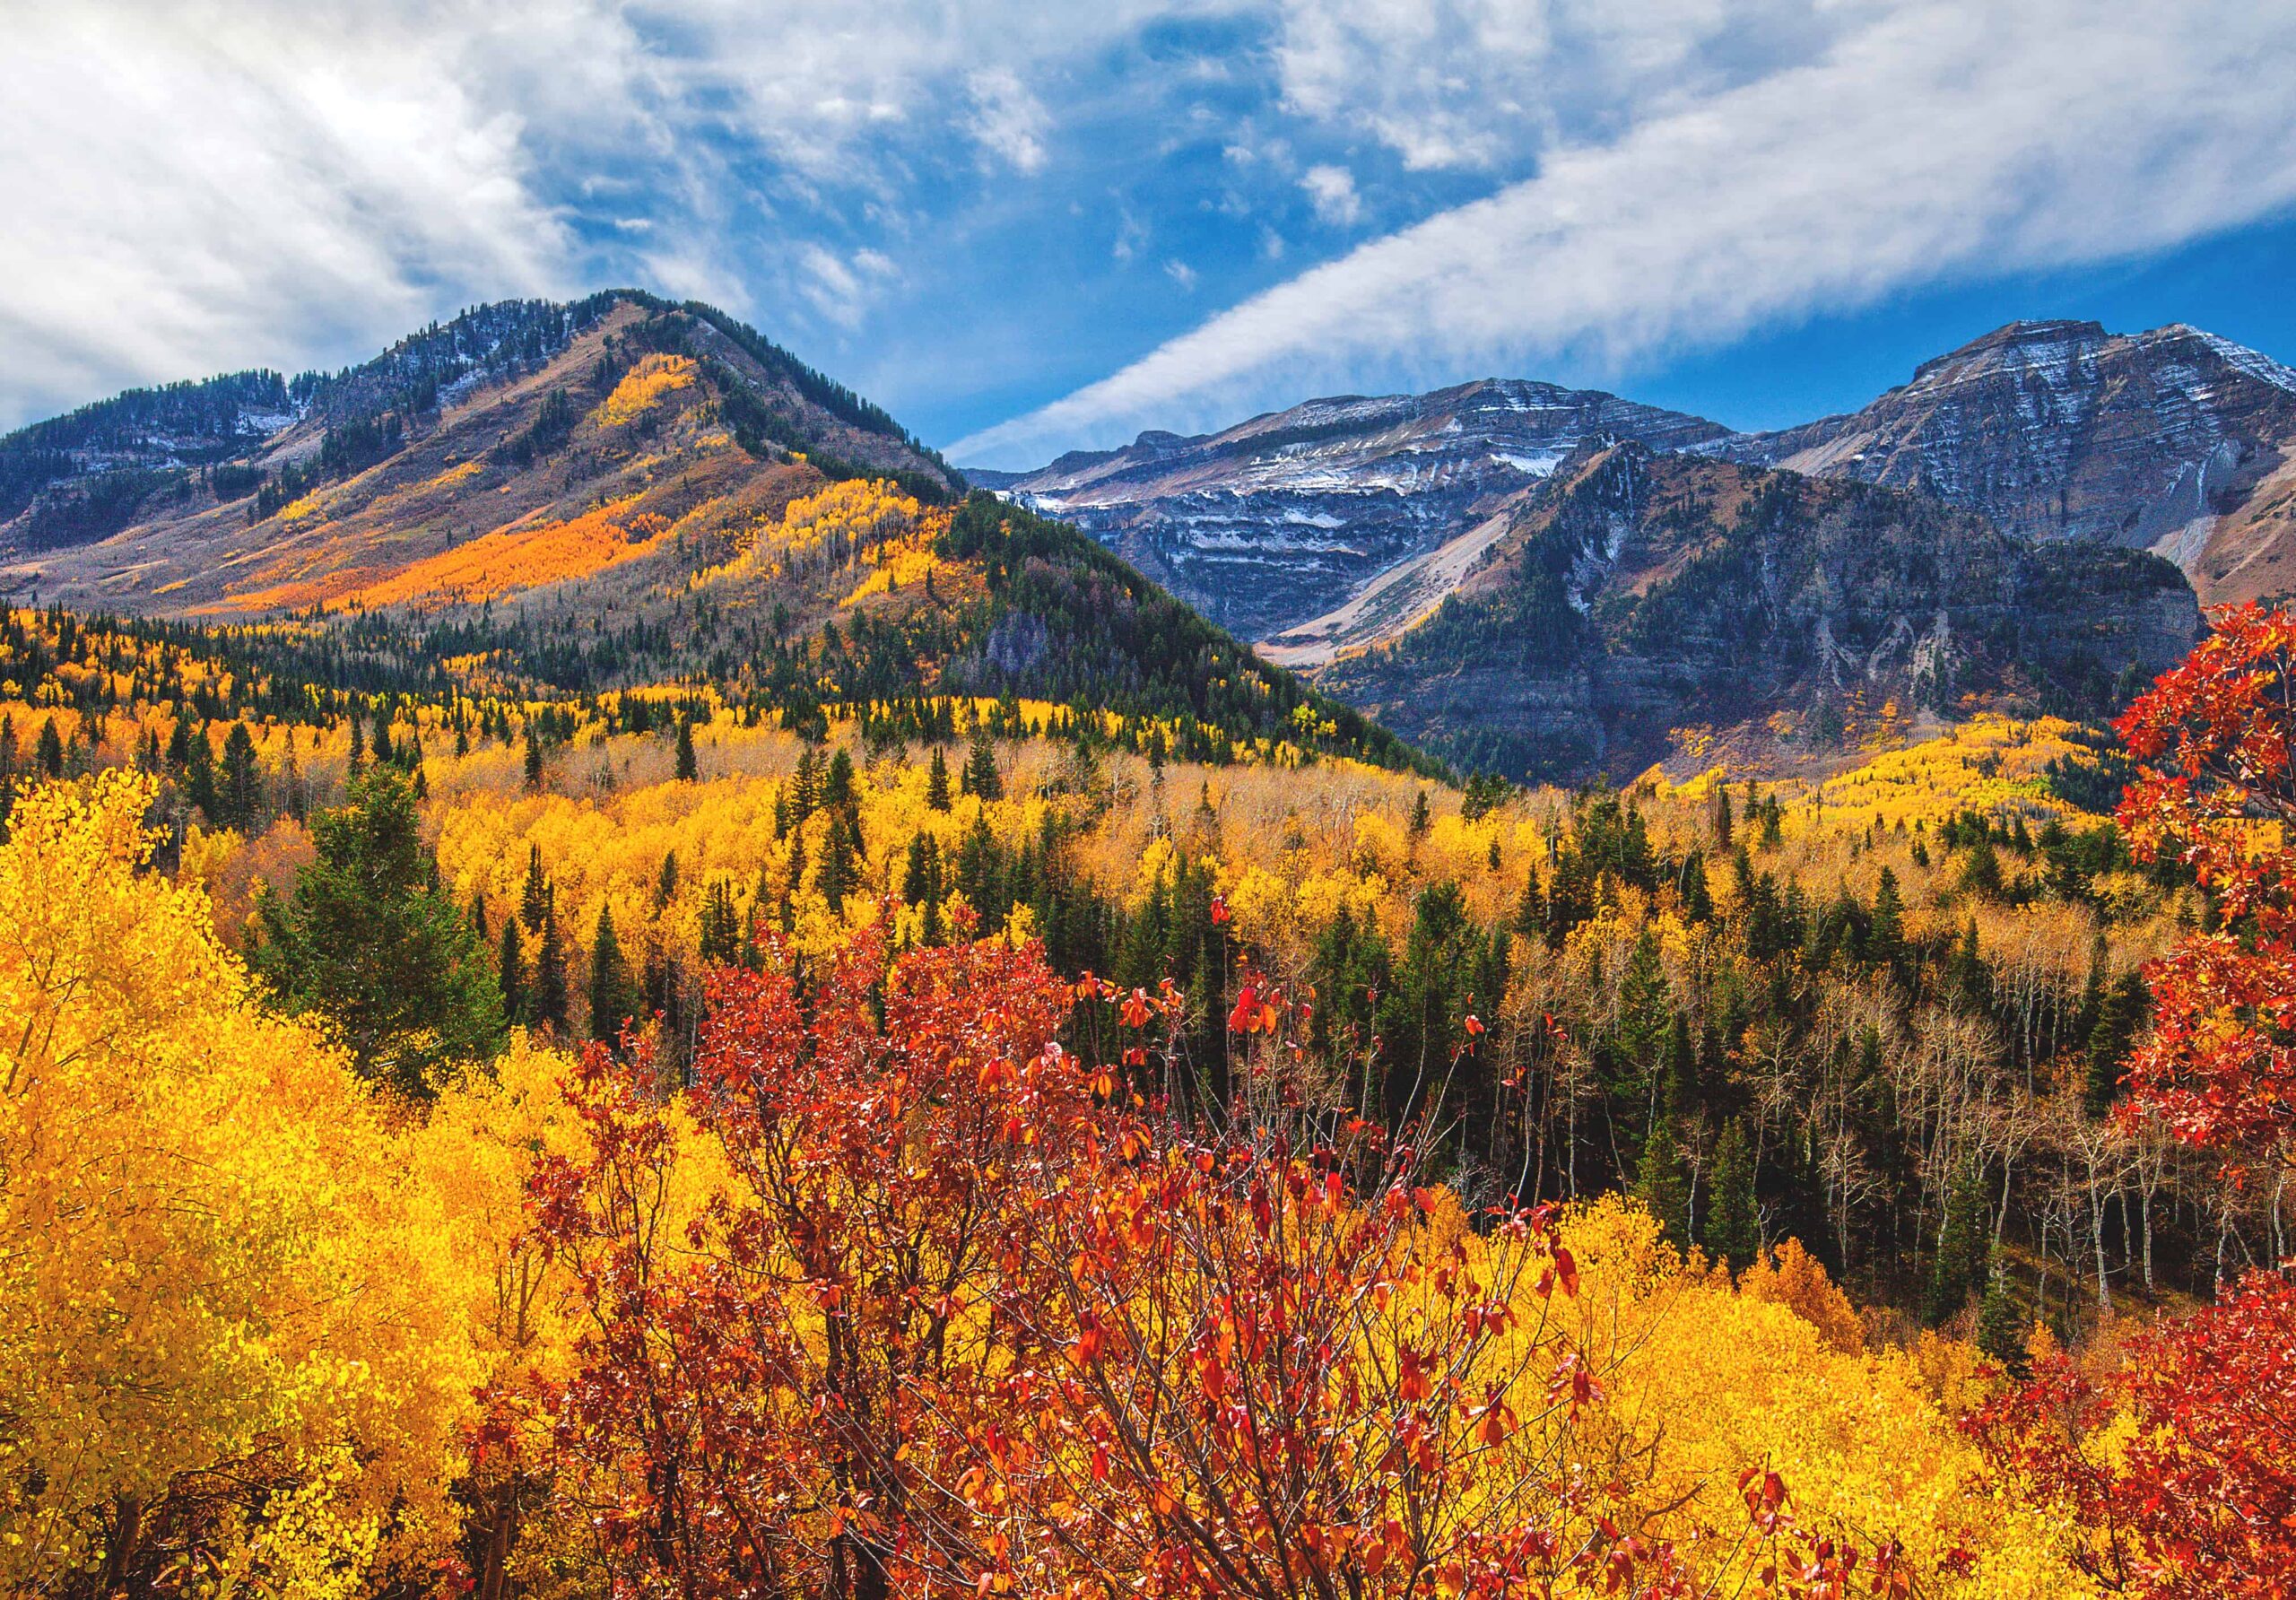 A mountain view of Salt Lake City in autumn.